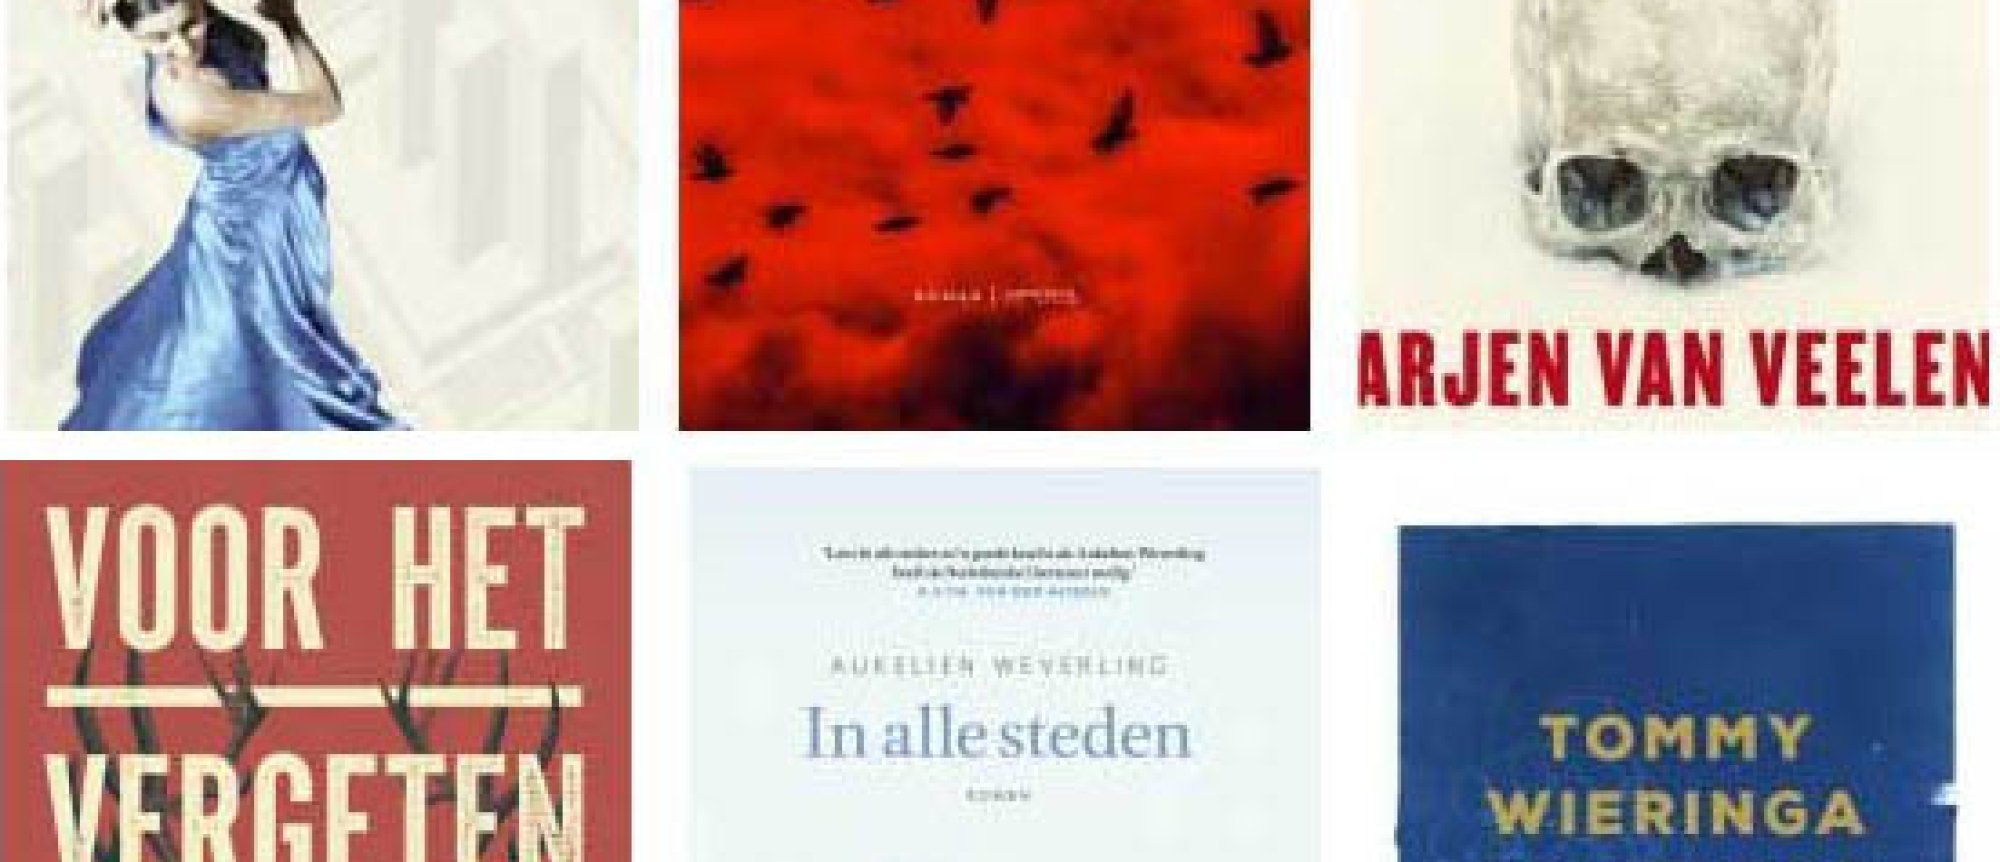 Shortlist BookSpot Literatuurprijs 2018 bekend